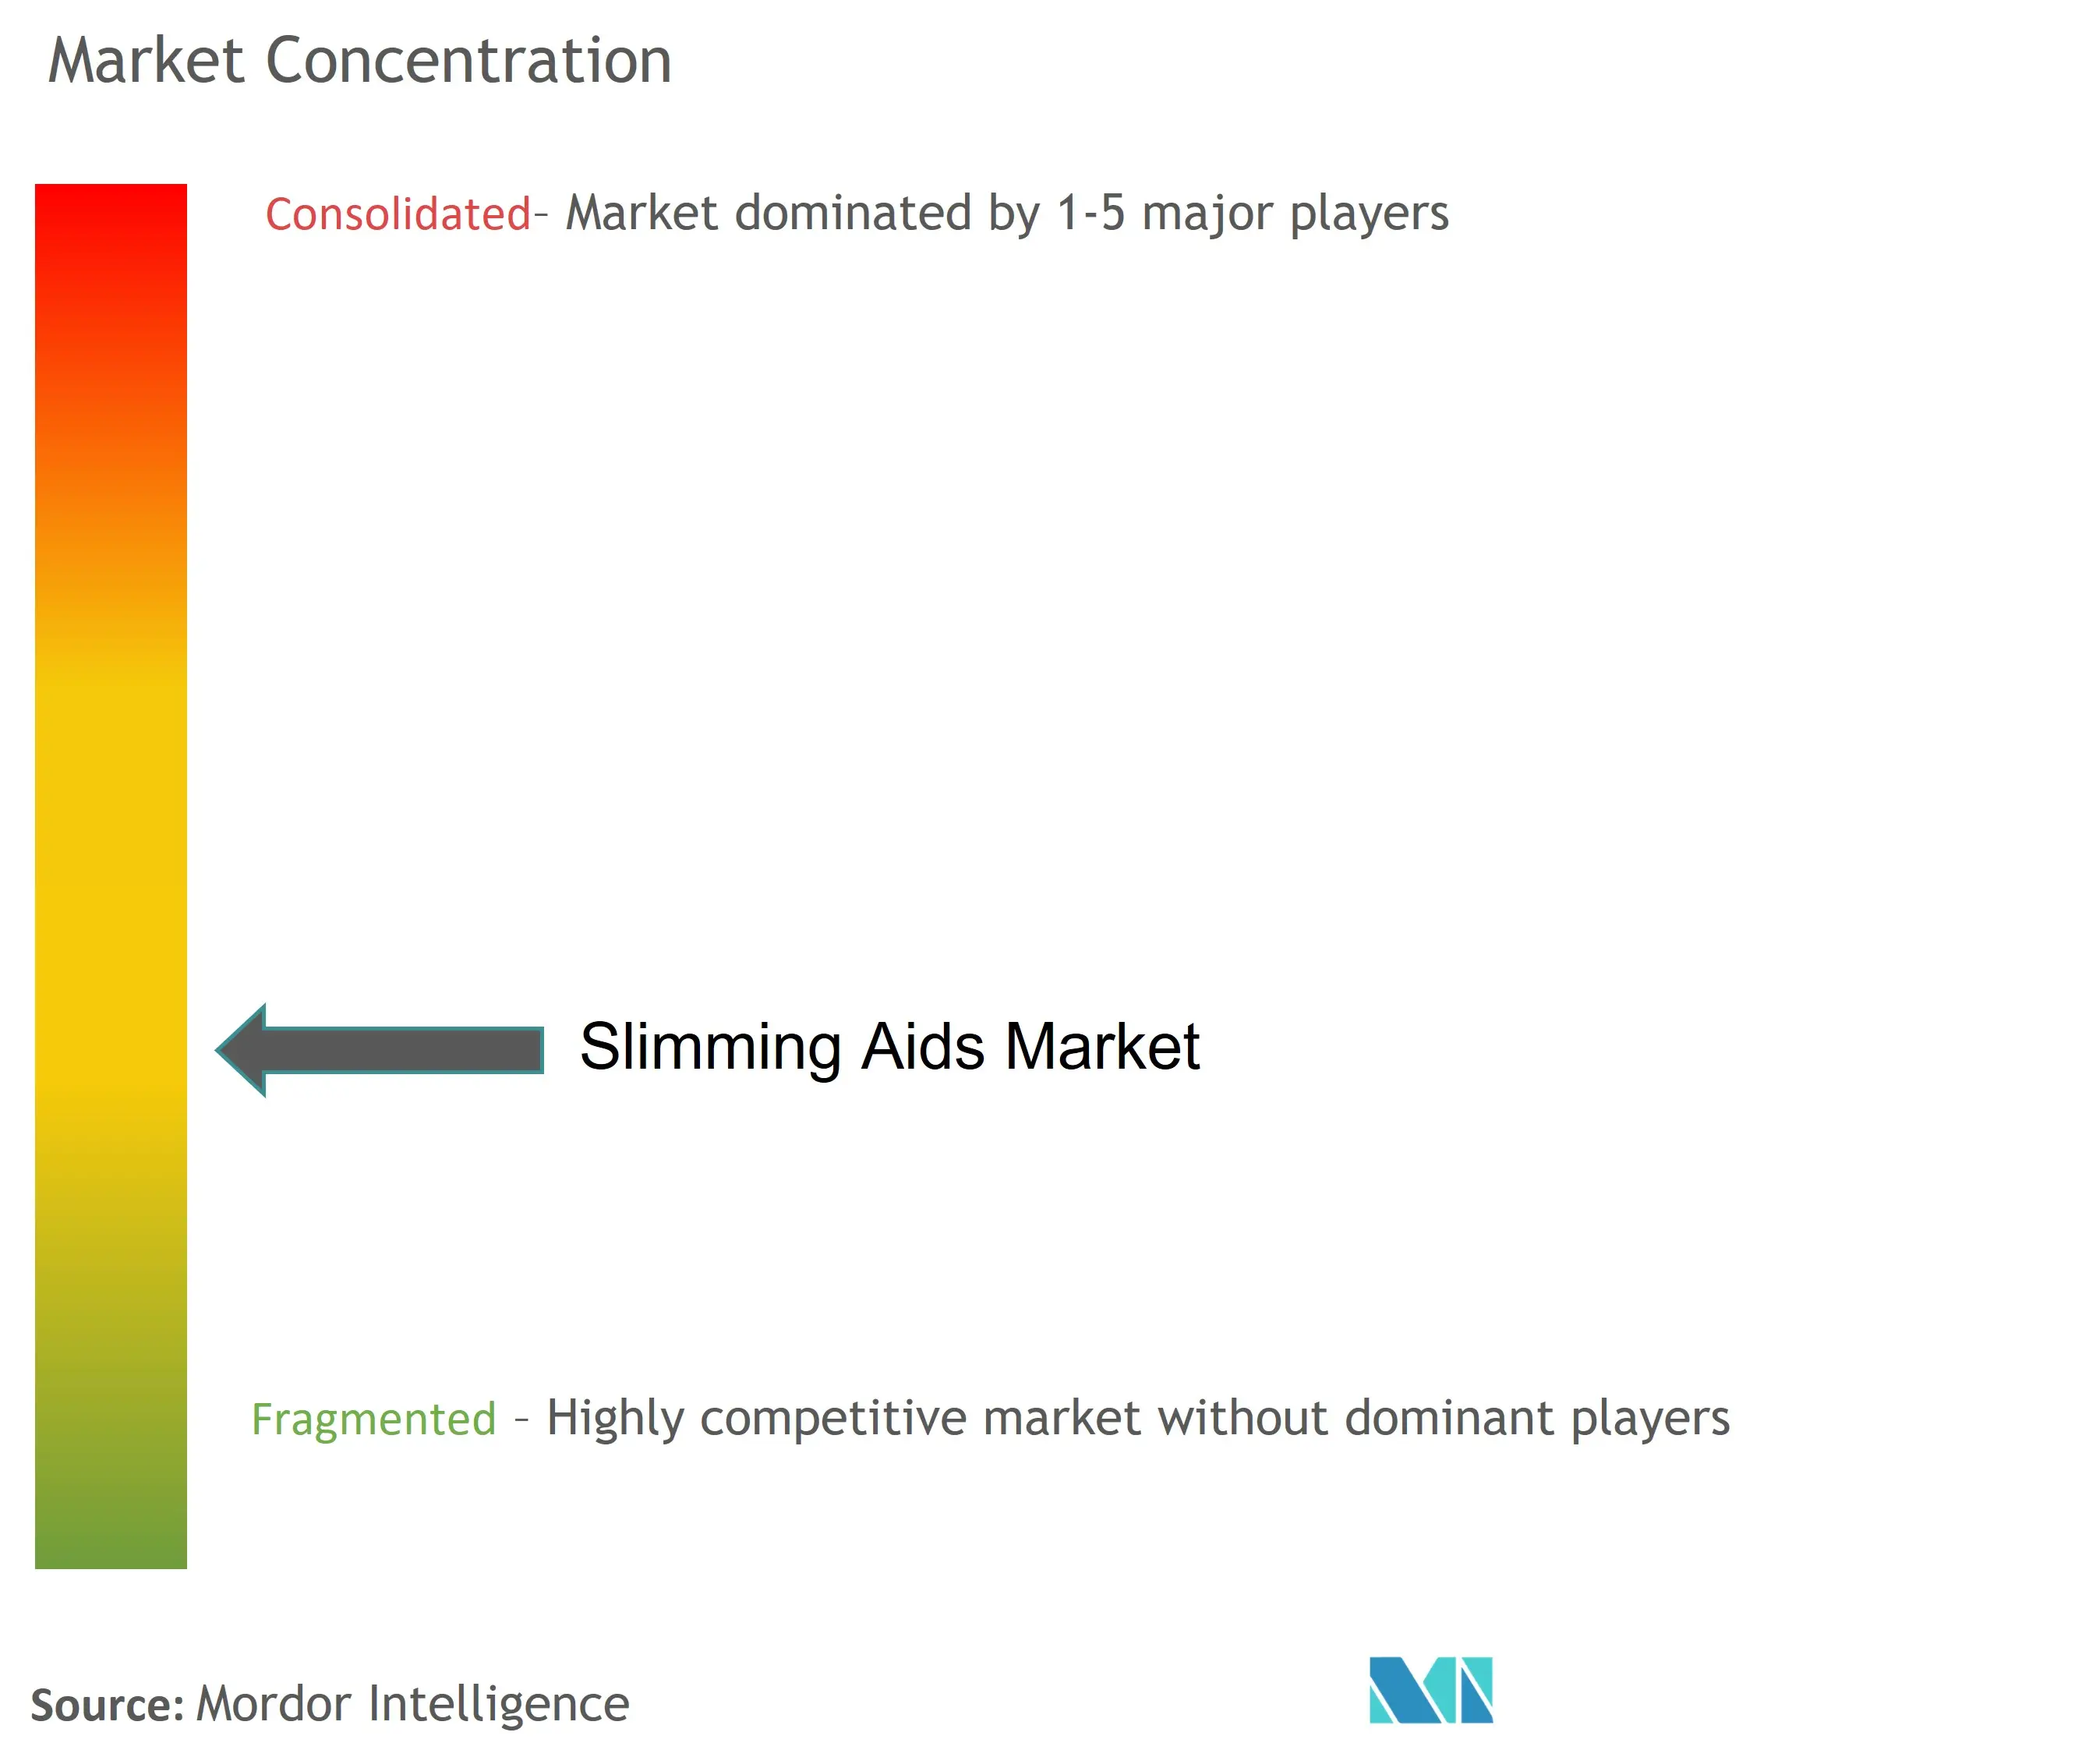 Global Slimming Aids Market Concentration